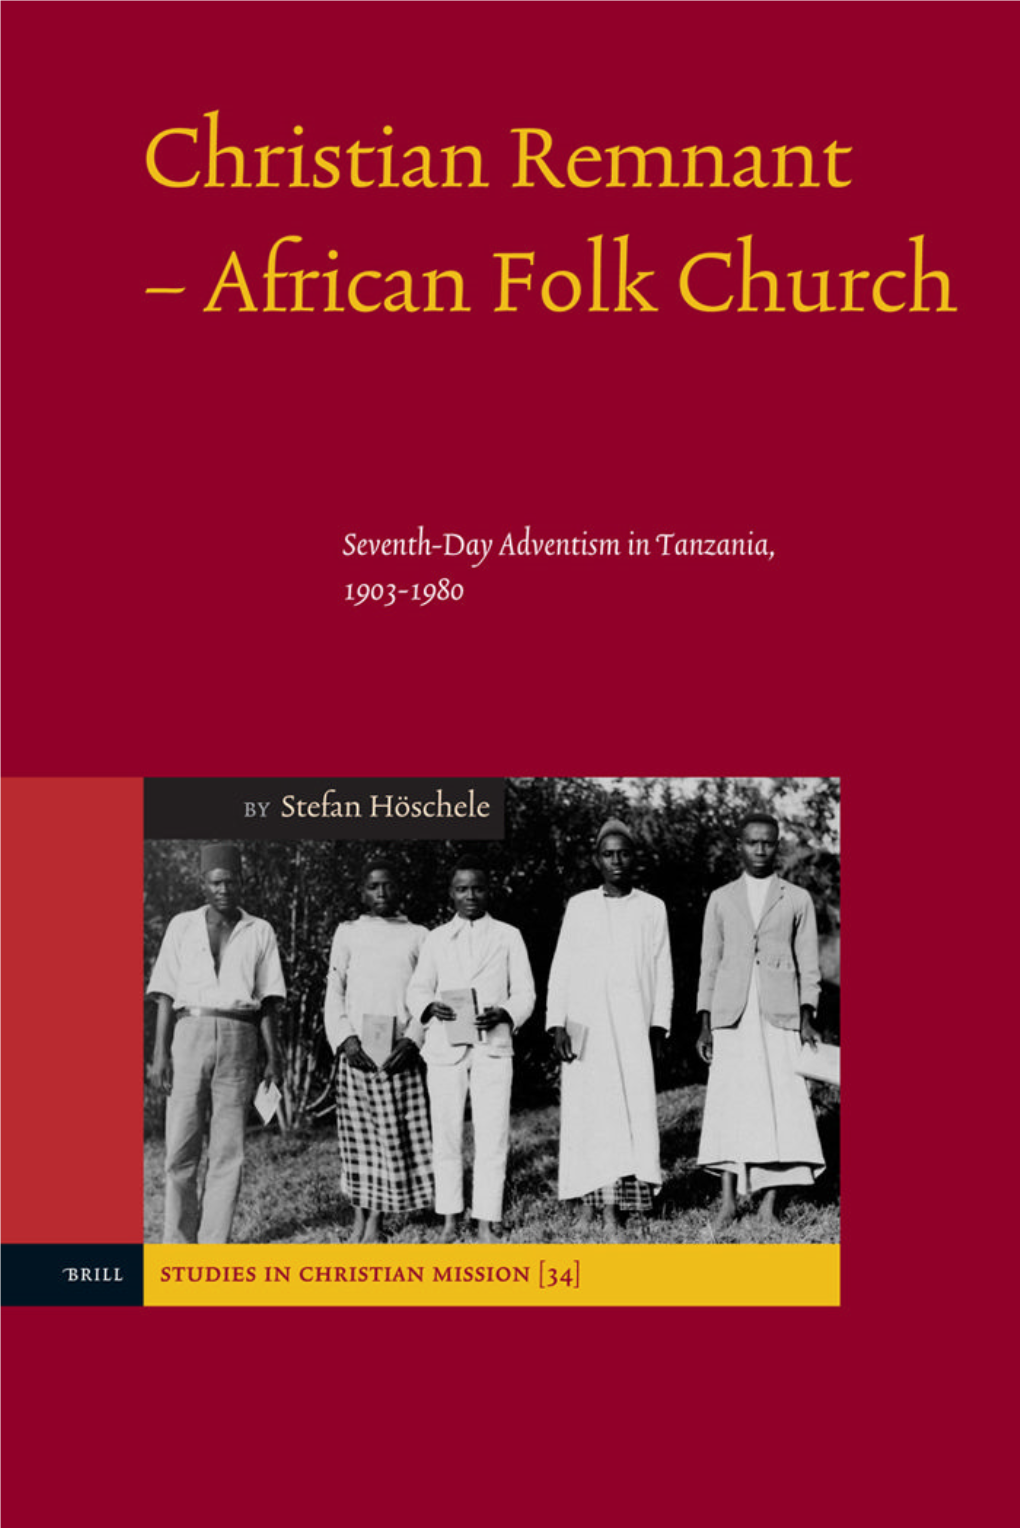 Christian Remnant-- African Folk Church